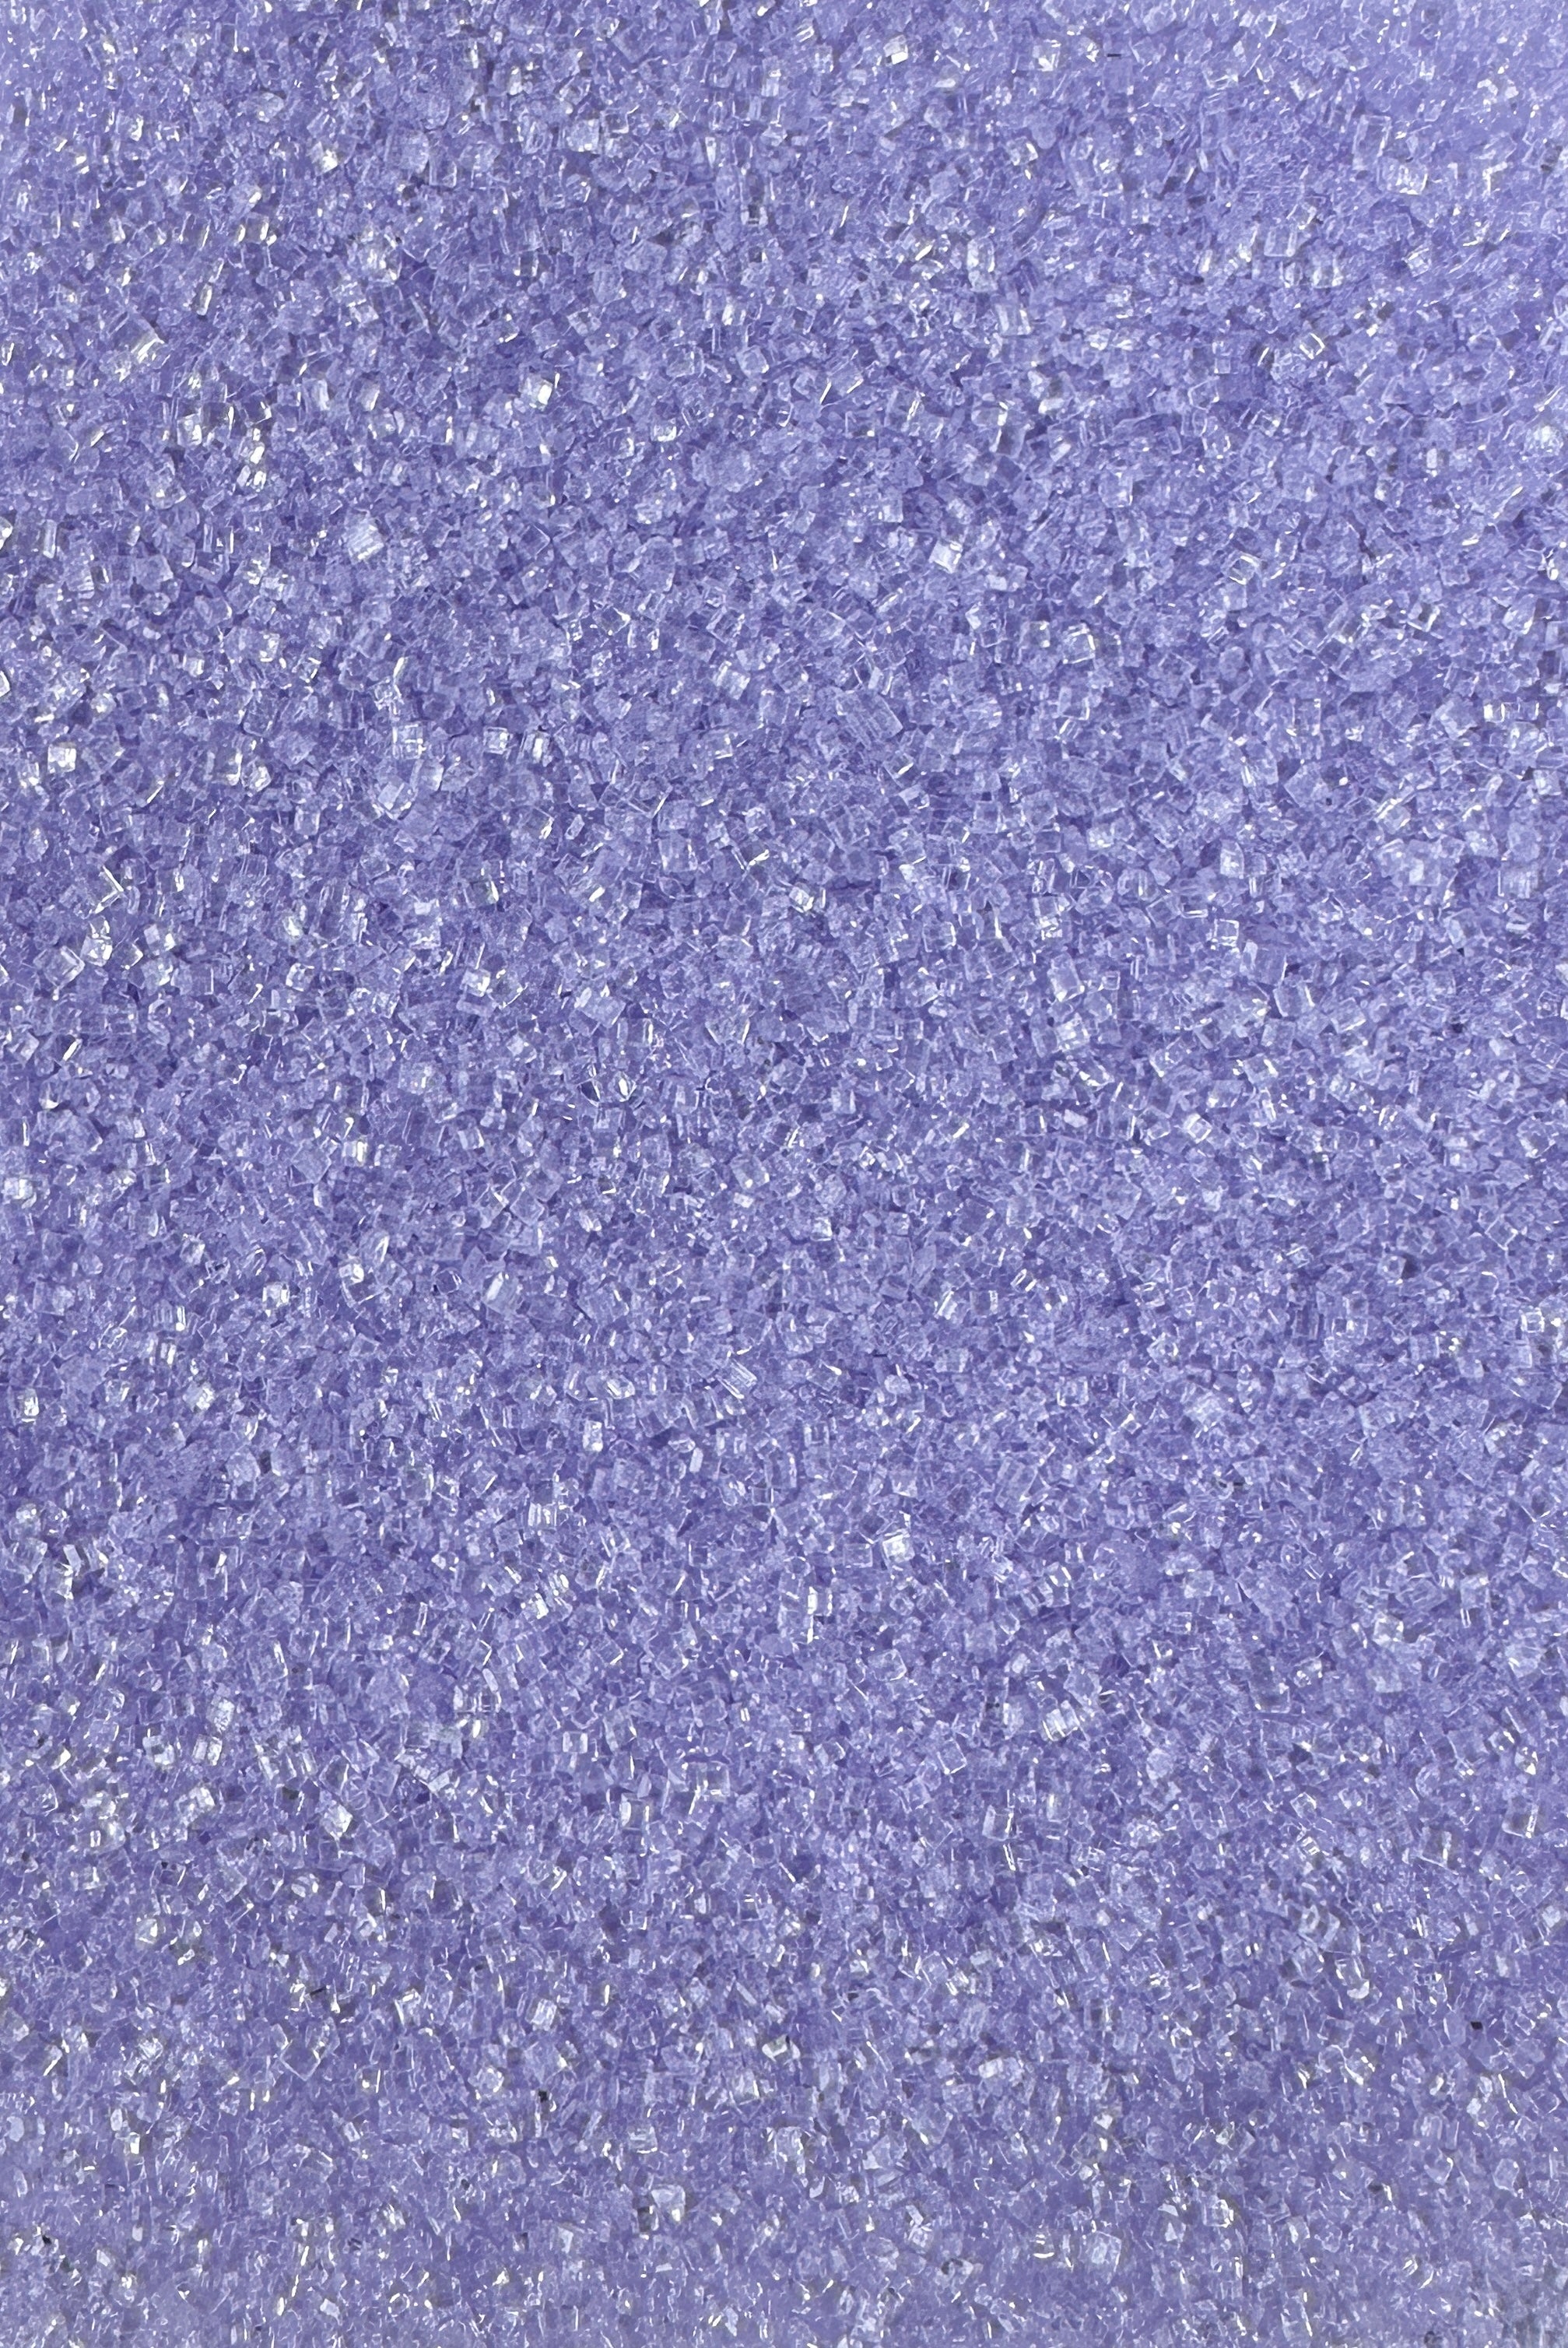 Pastel Purple Coarse Sugar - US